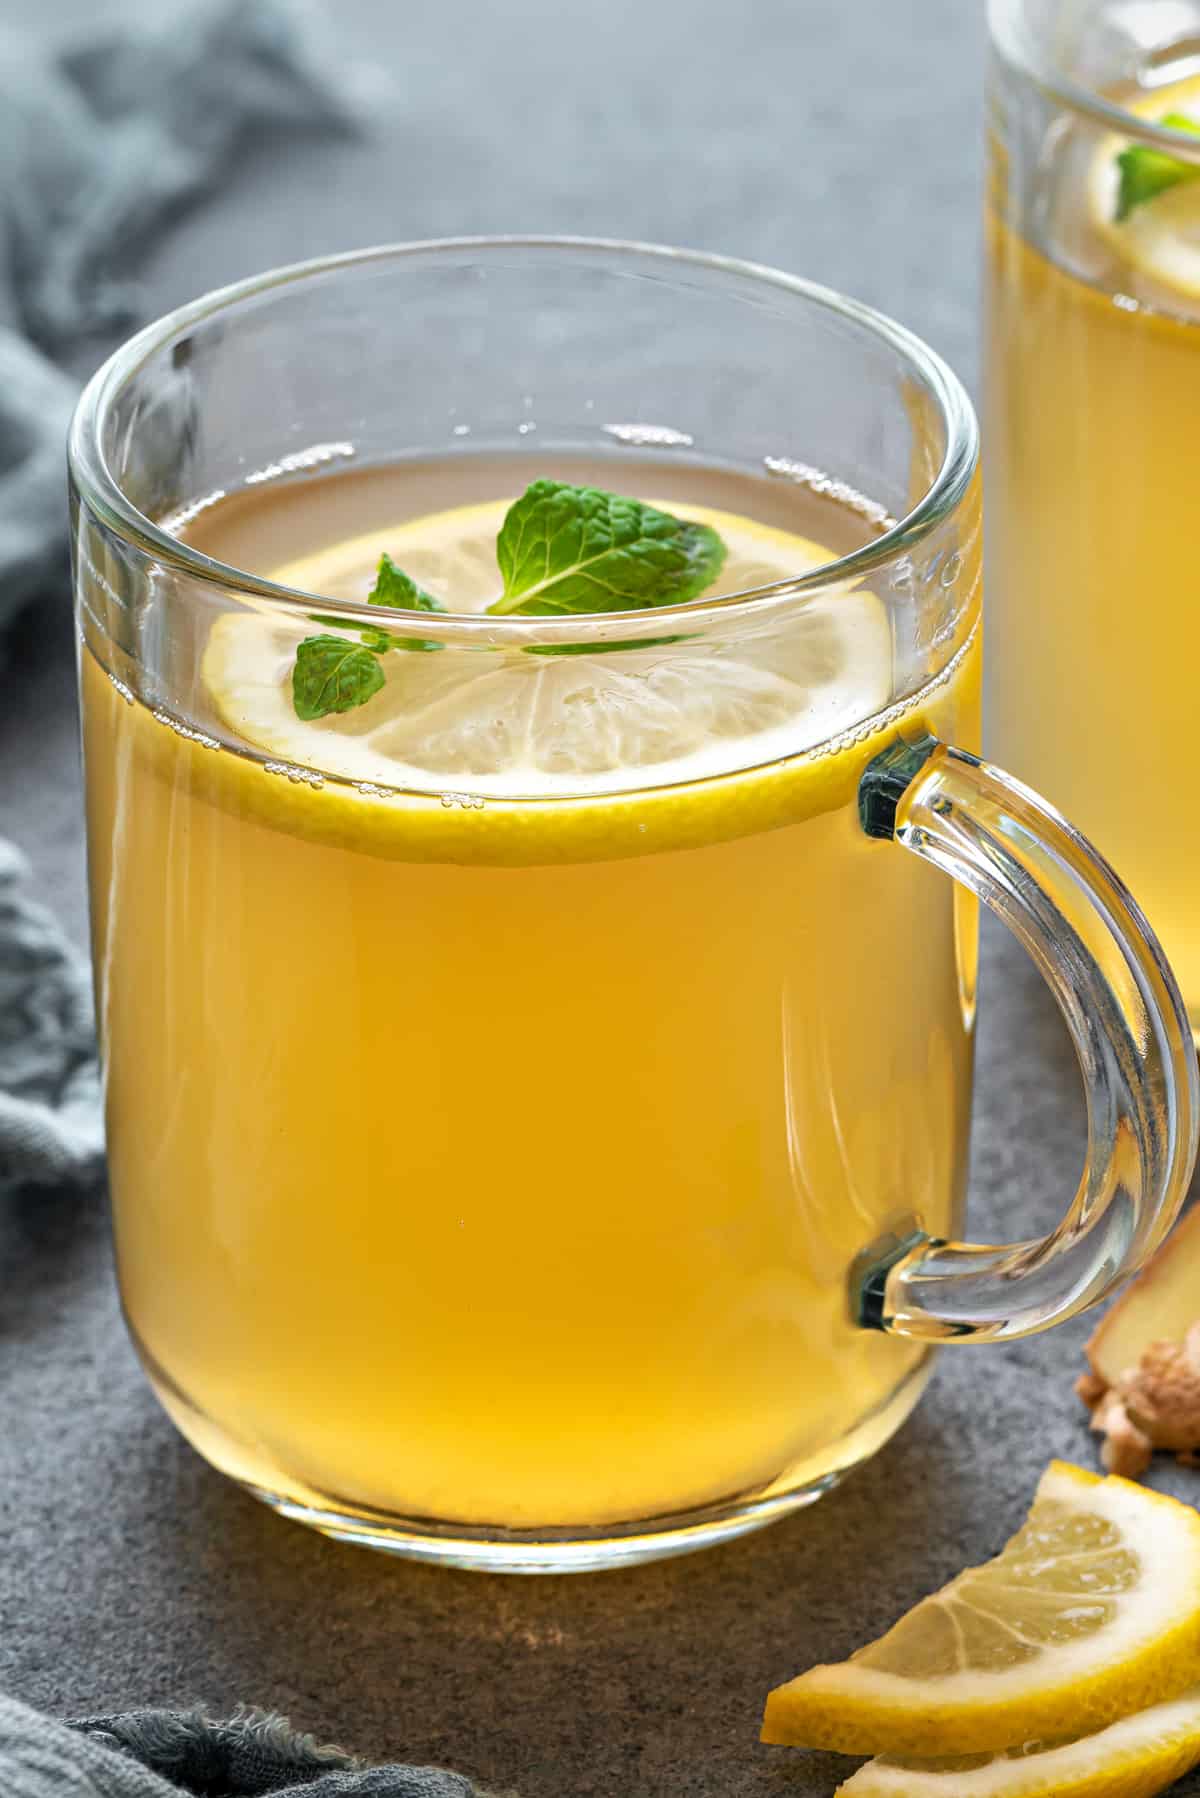 Close-up of a mug with ginger lemon tea garnished with lemon slices and fresh mint leaves.